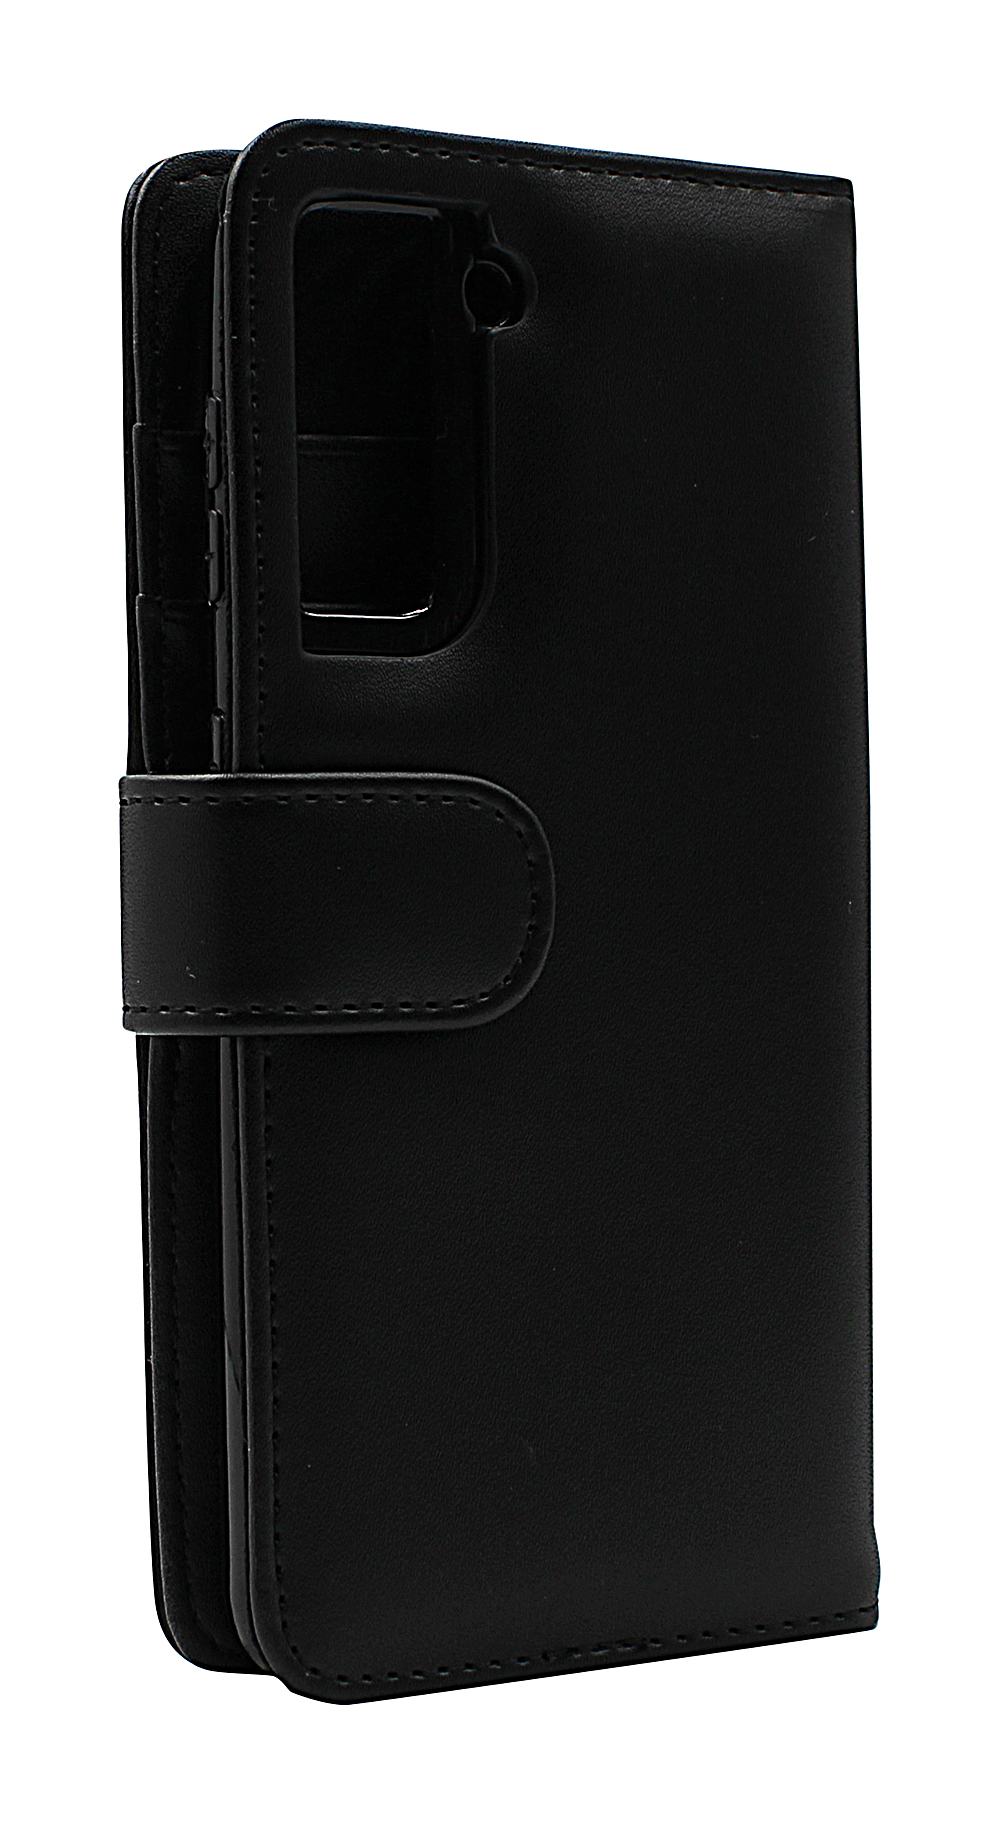 CoverIn Skimblocker Lompakkokotelot Samsung Galaxy S21 5G (G991B)